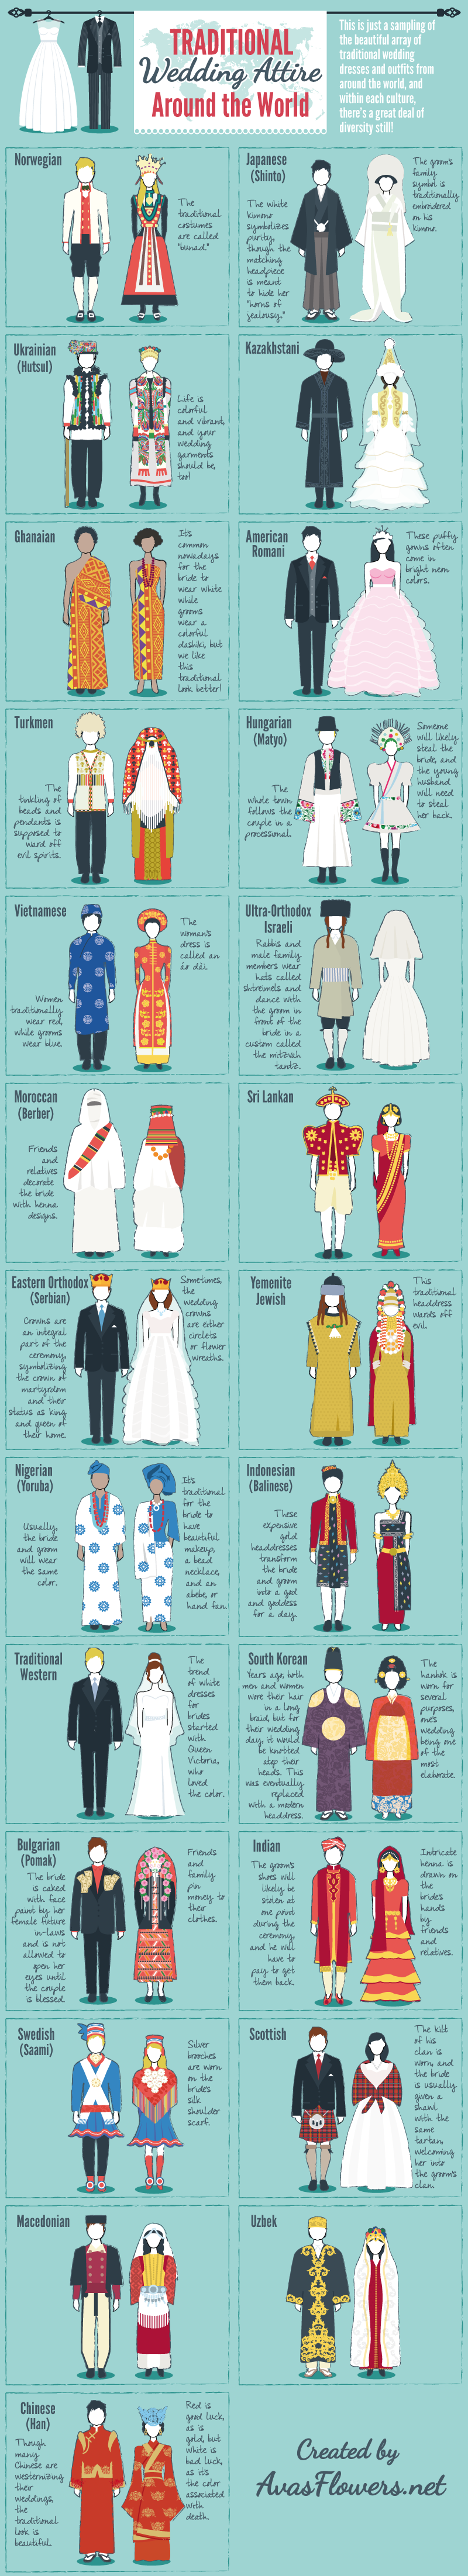 Traditional Wedding Attire Around the World [INFOGRAPHIC]